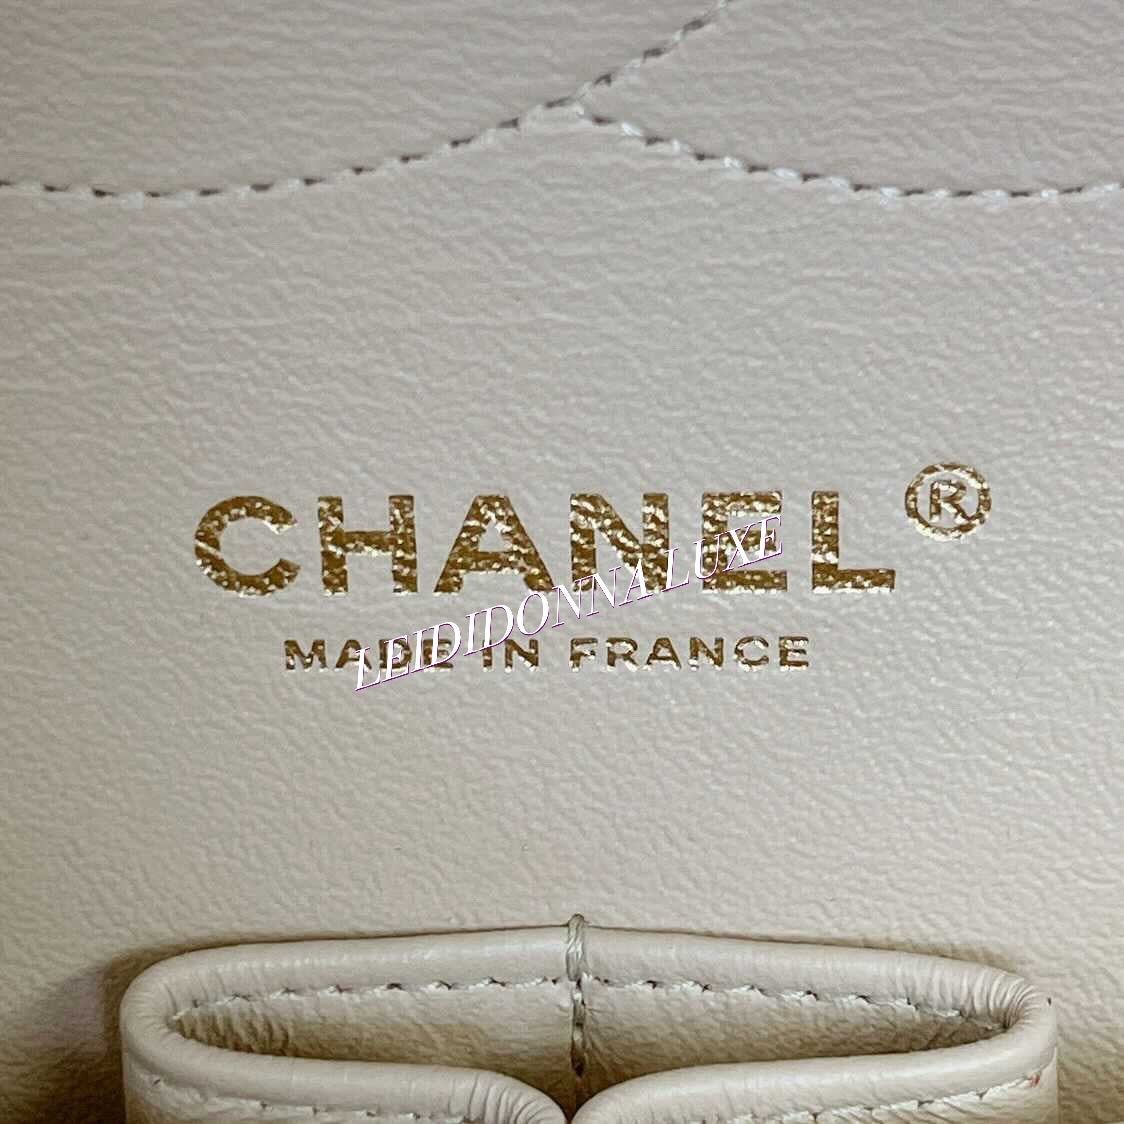 Chanel Timeless Classic Jumbo